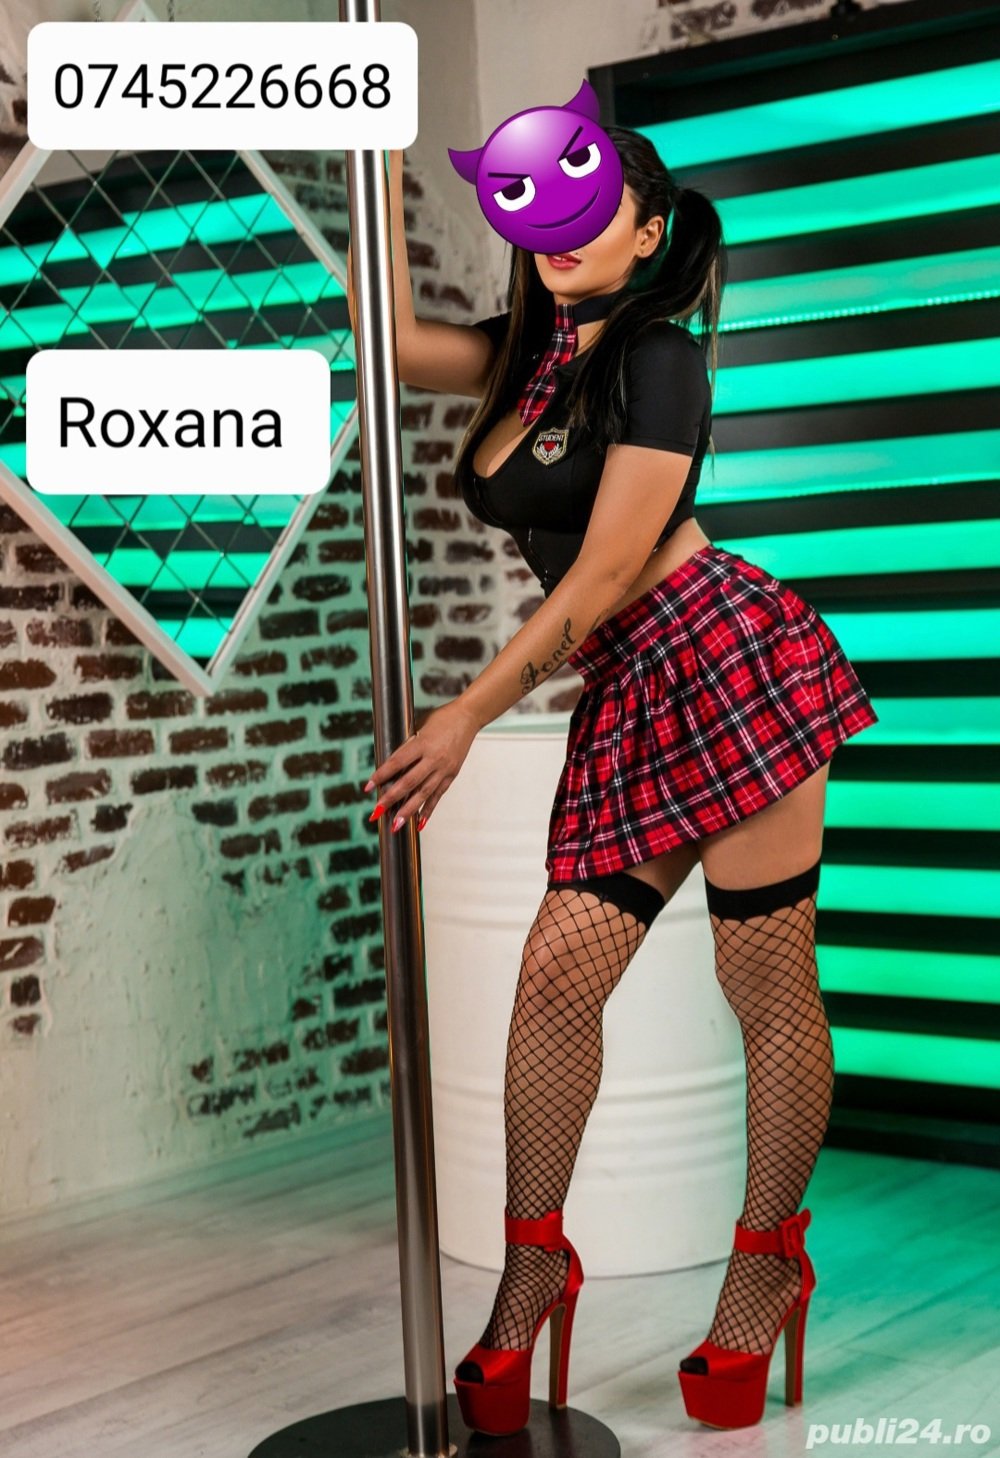 !!!Am revenit Roxana pircing zona intima!!! 100%reala  - imagine 2